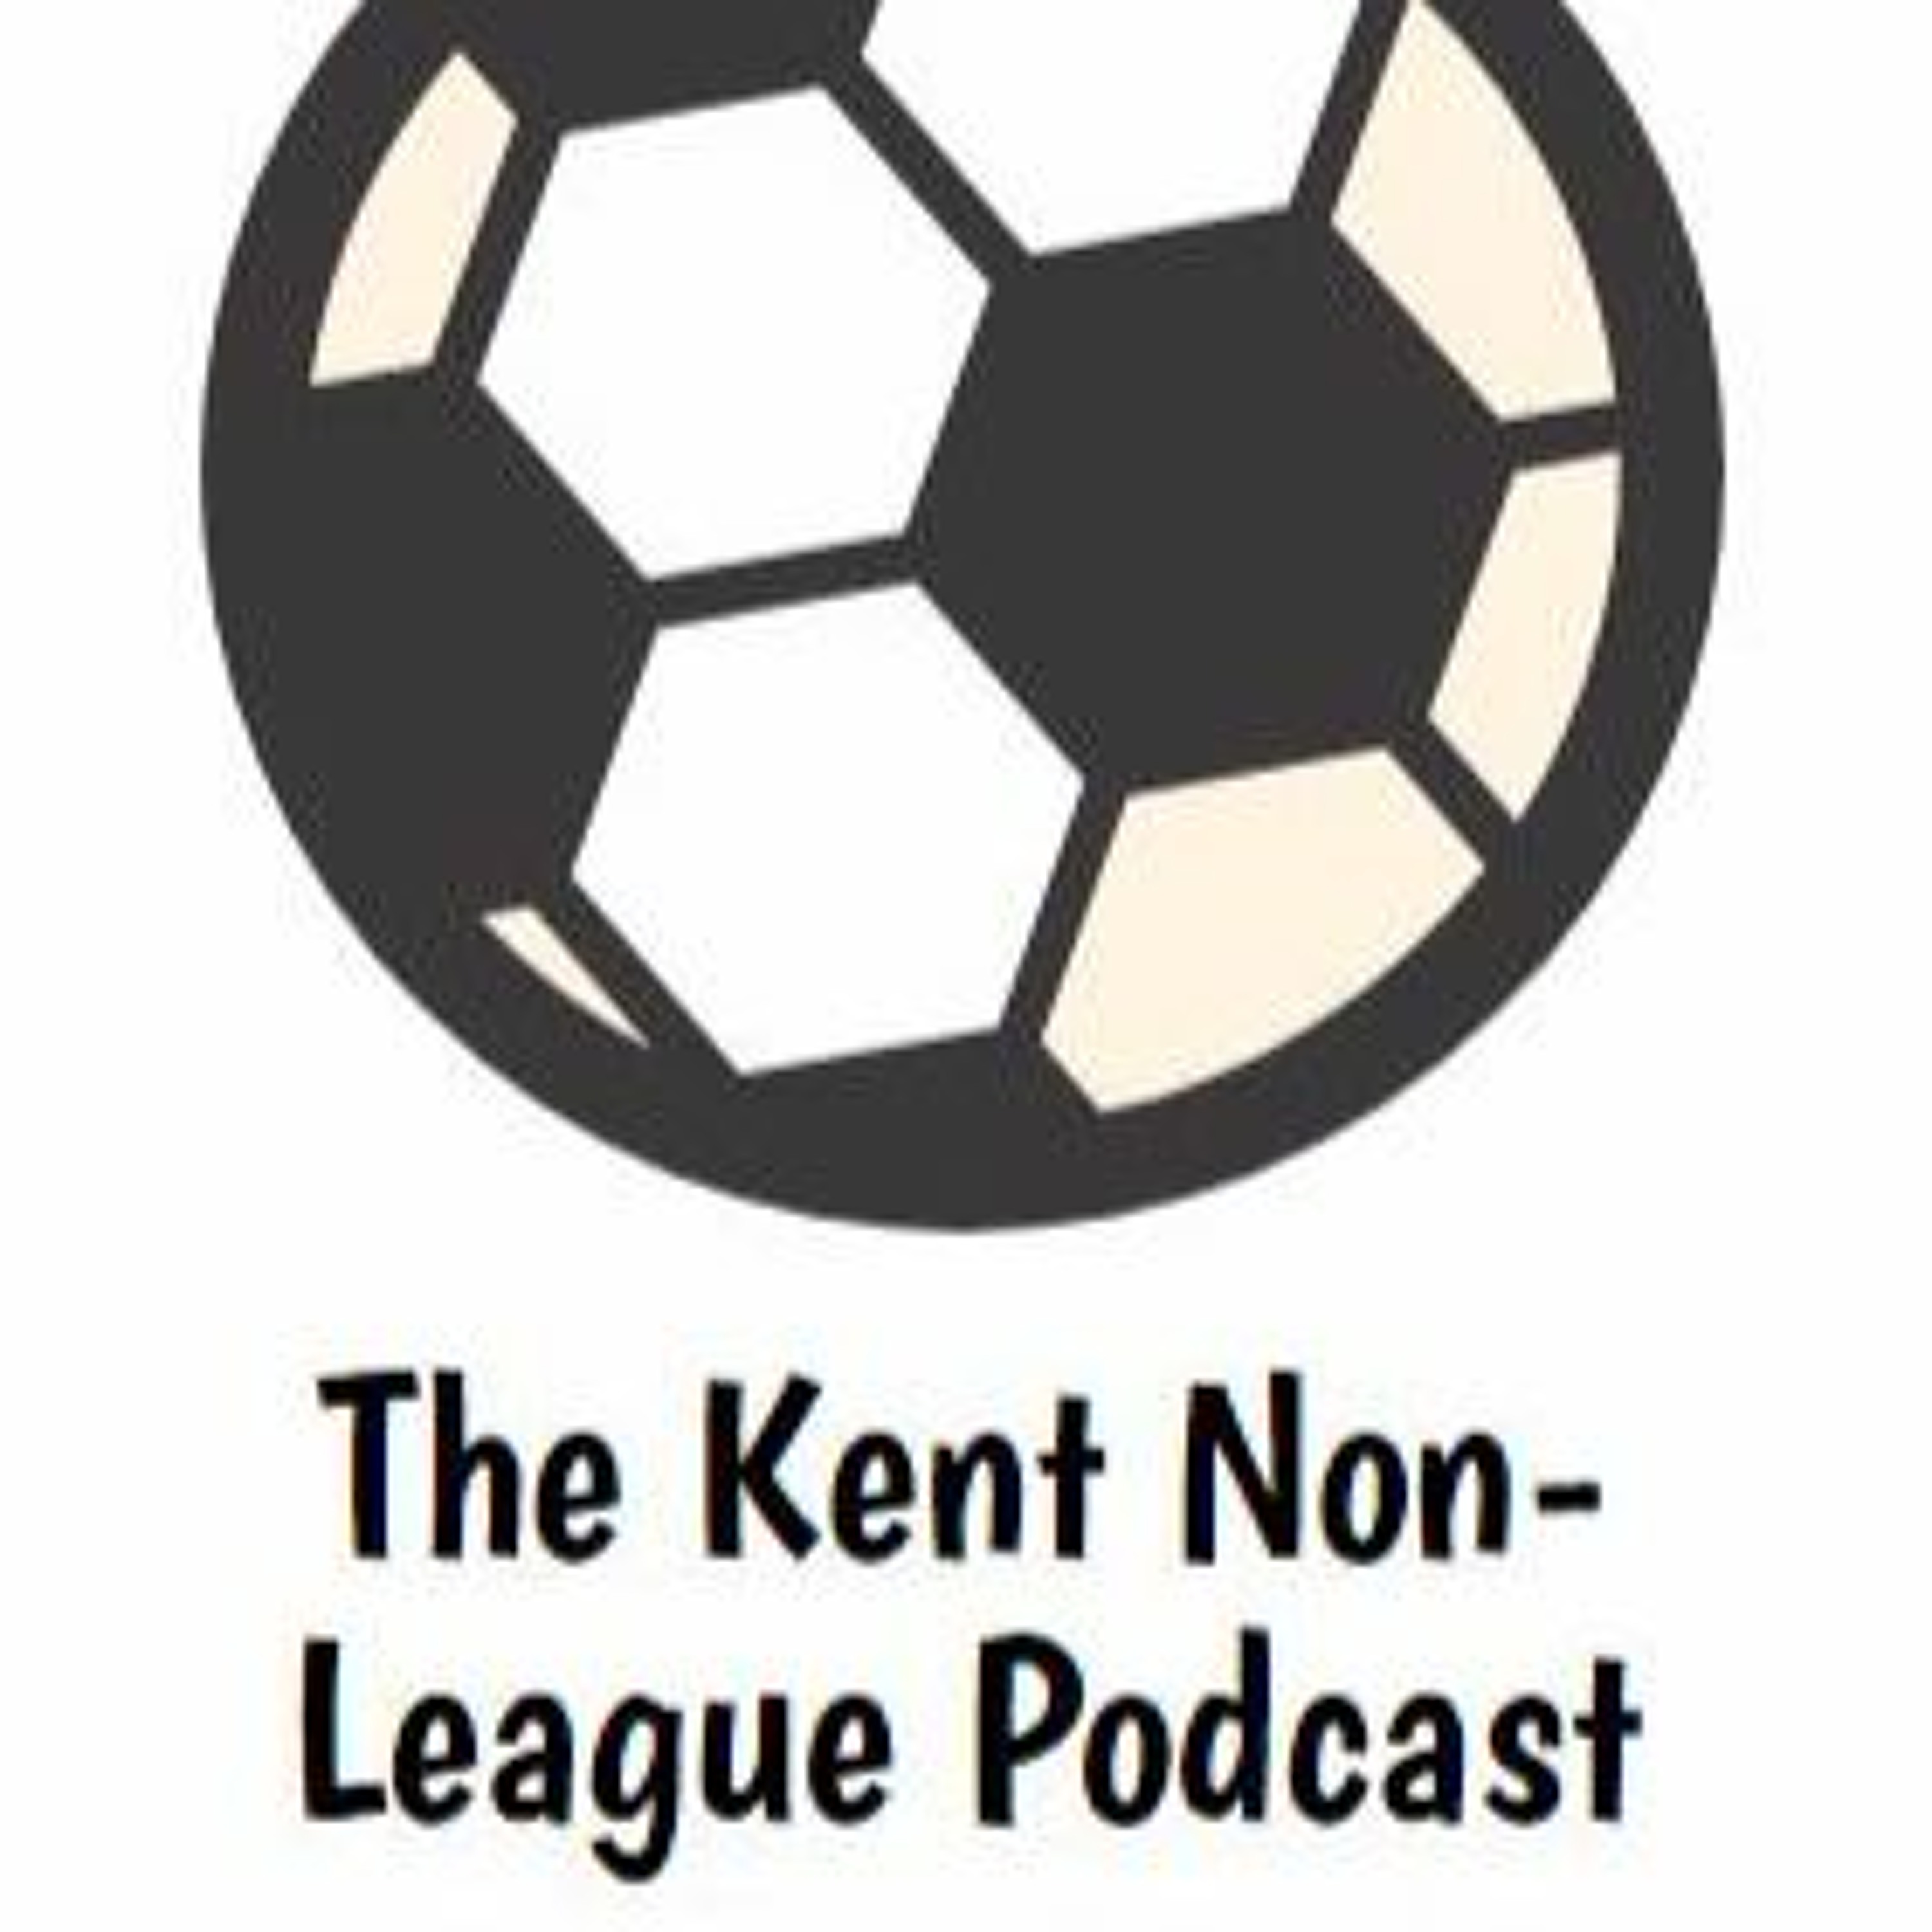 Kent Non-League Podcast Episode Three